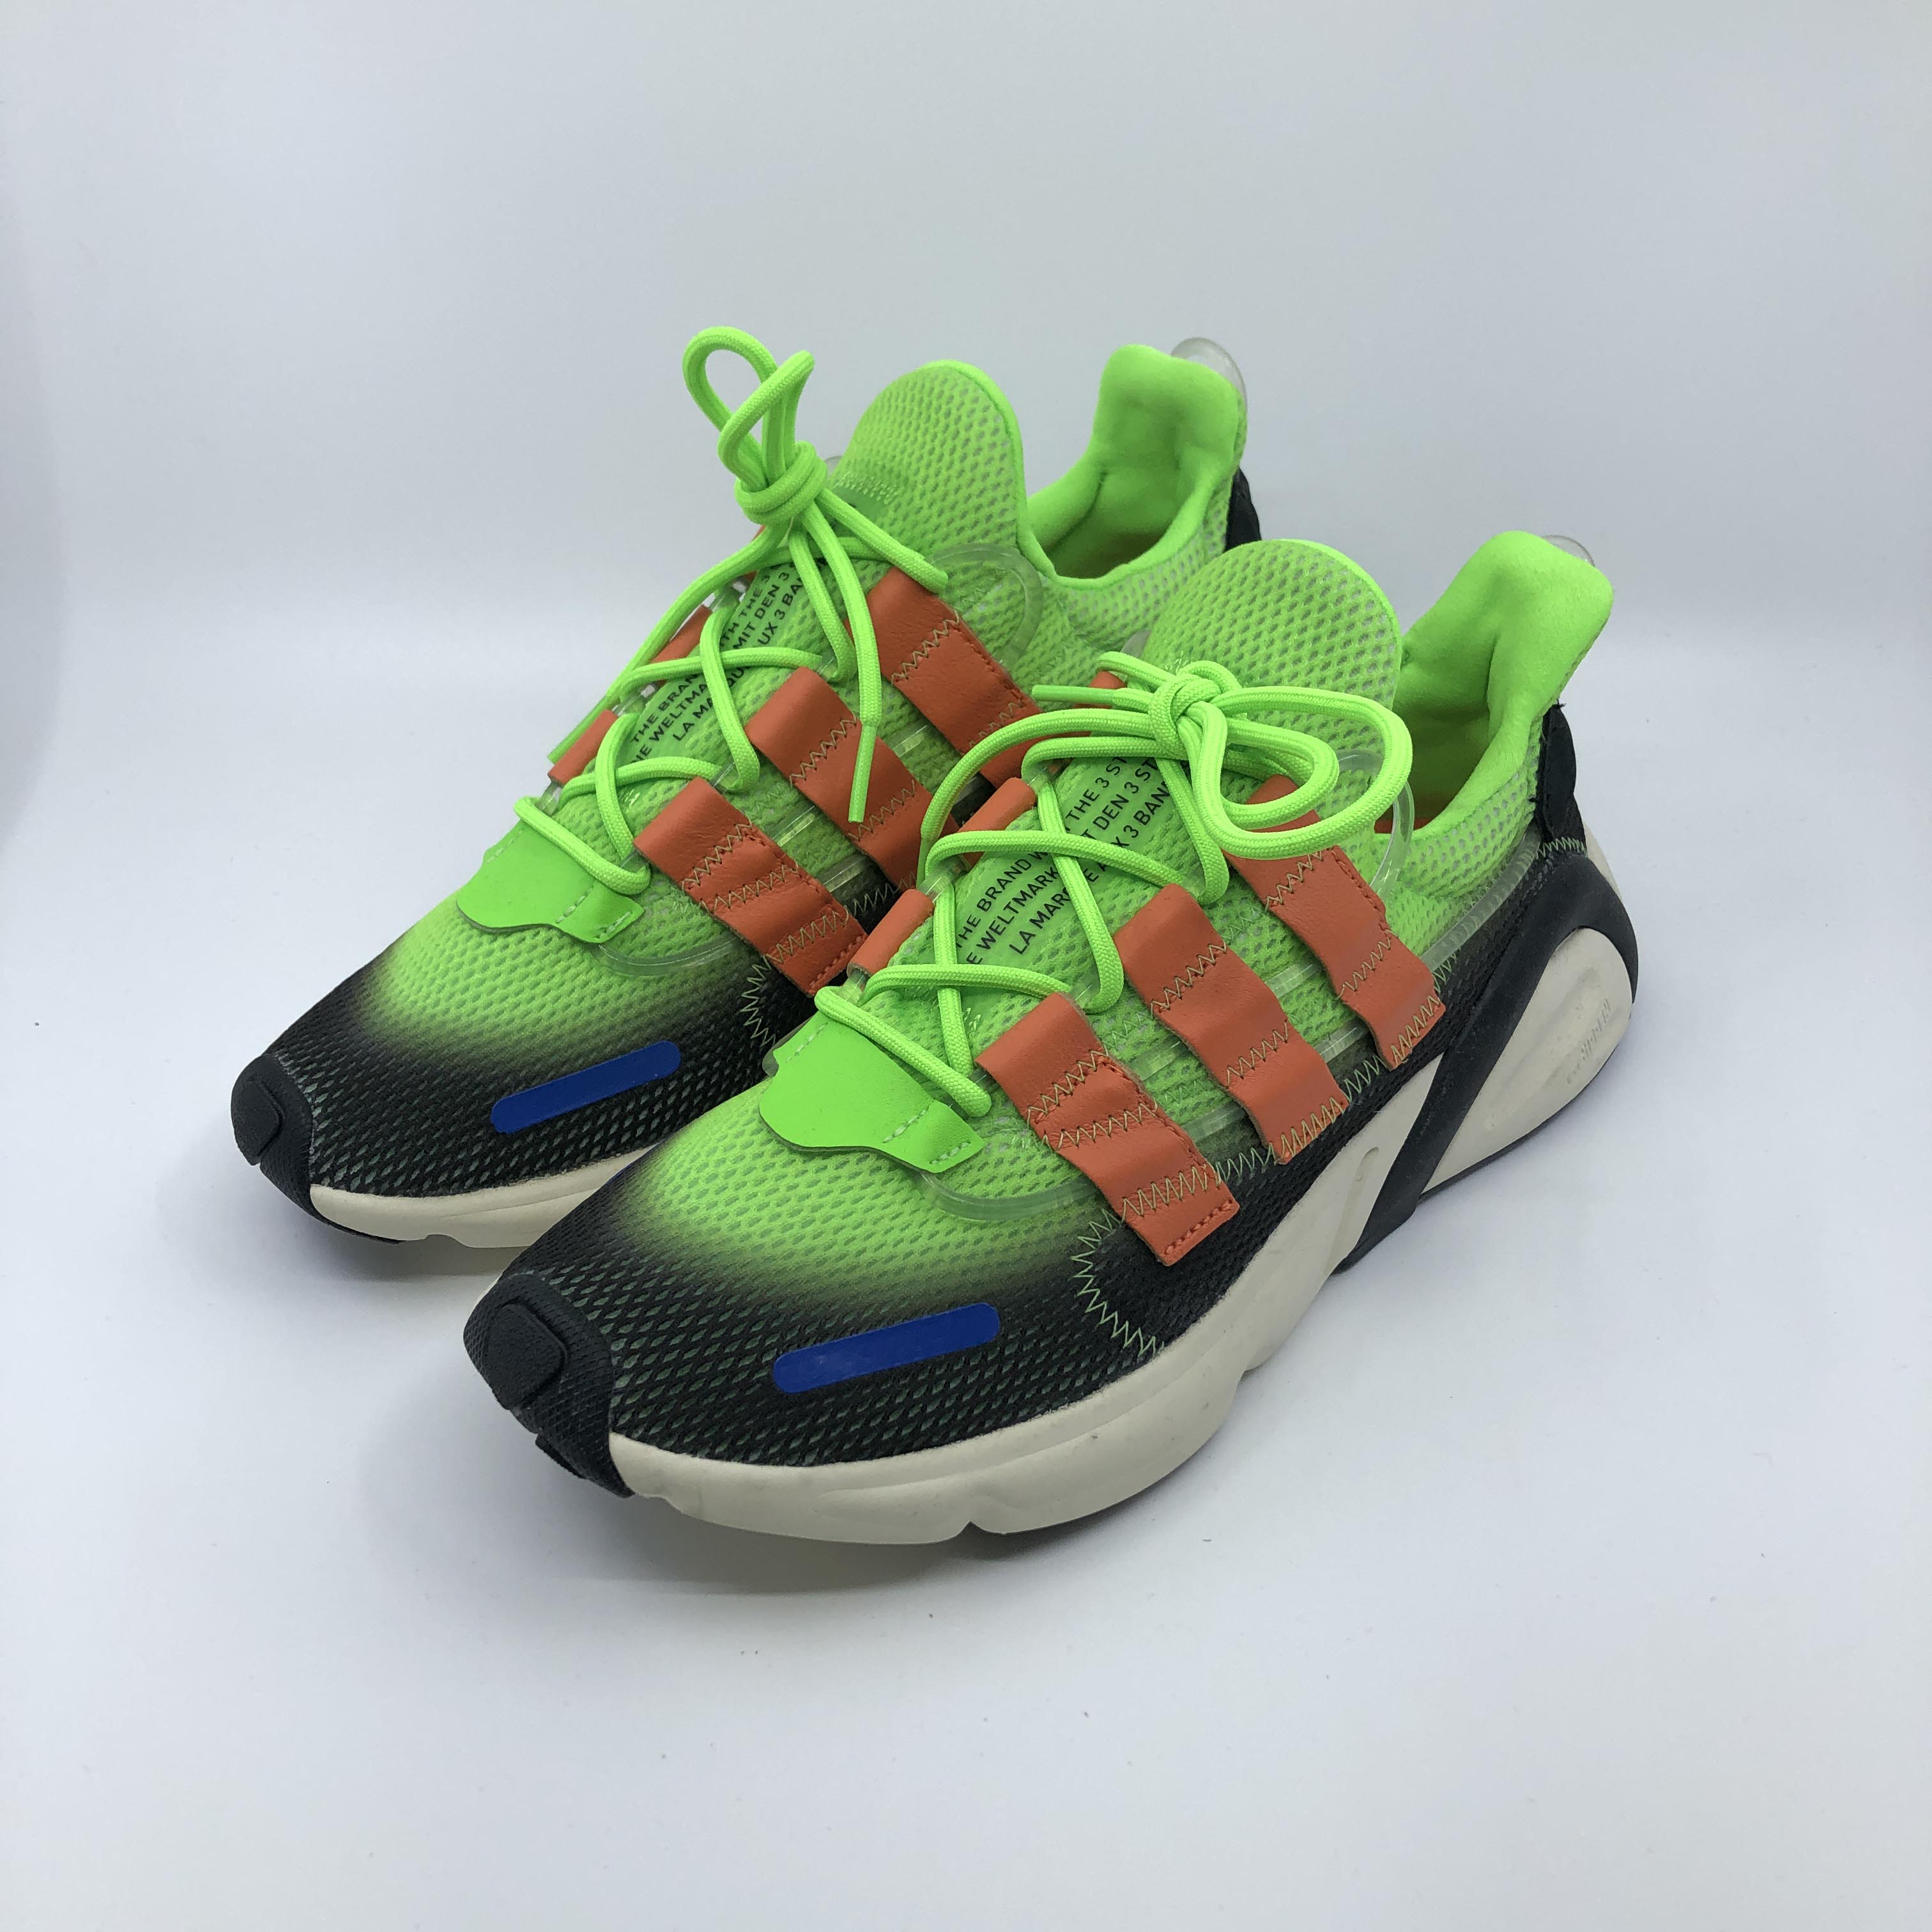 [Adidas] ORIGINALS LXCON SOLAR GREEN SNEAKERS - Size 265